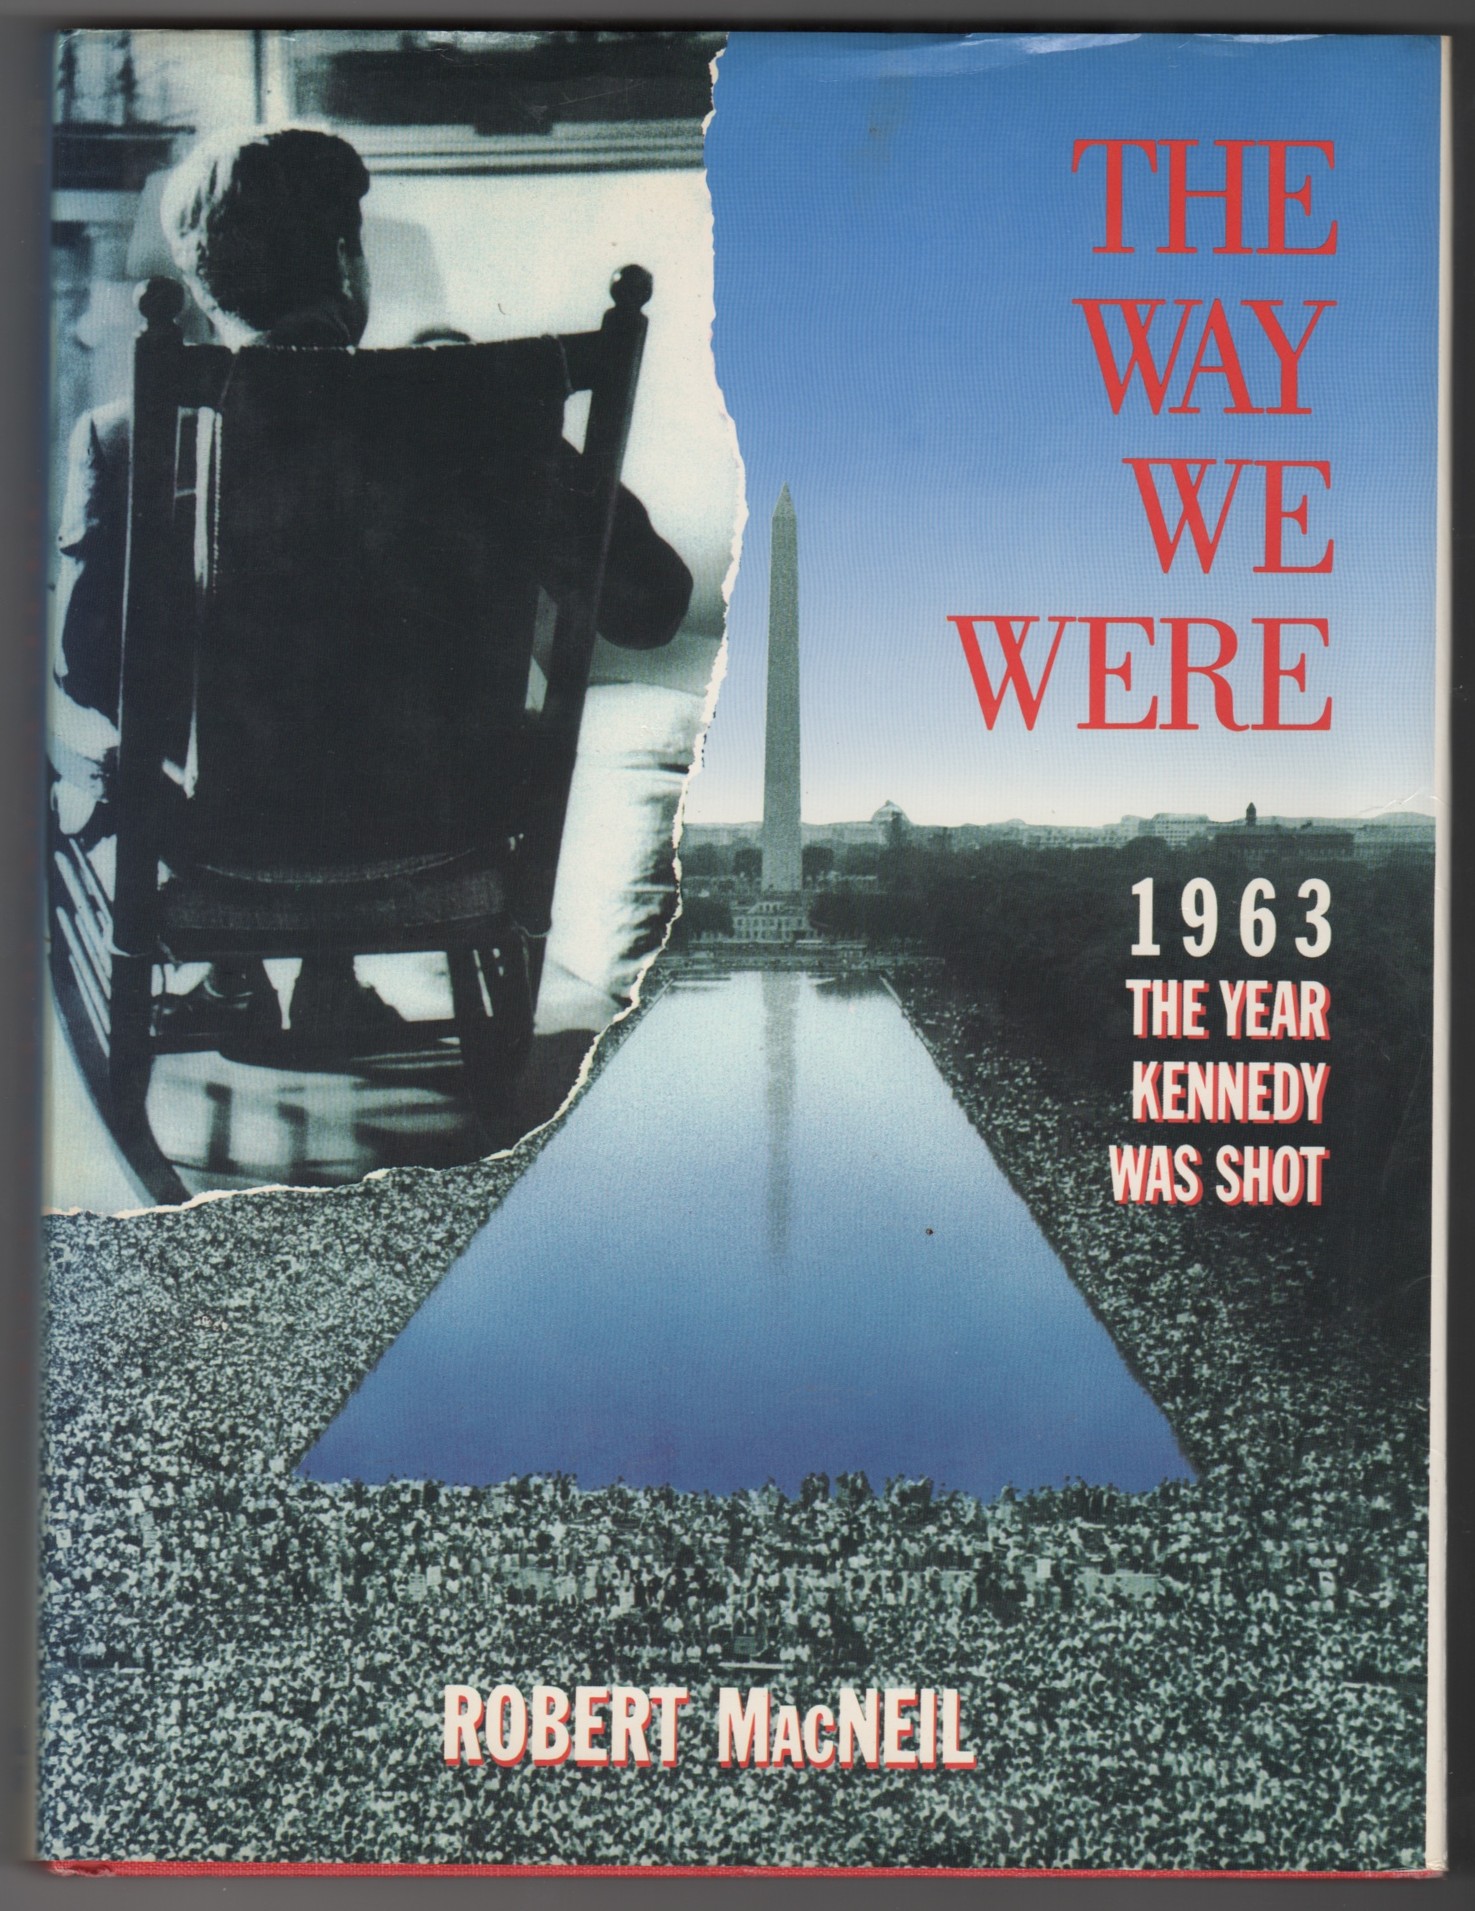 MACNEIL, ROBERT - The Way We Were 1963, the Year Kennedy Was Shot